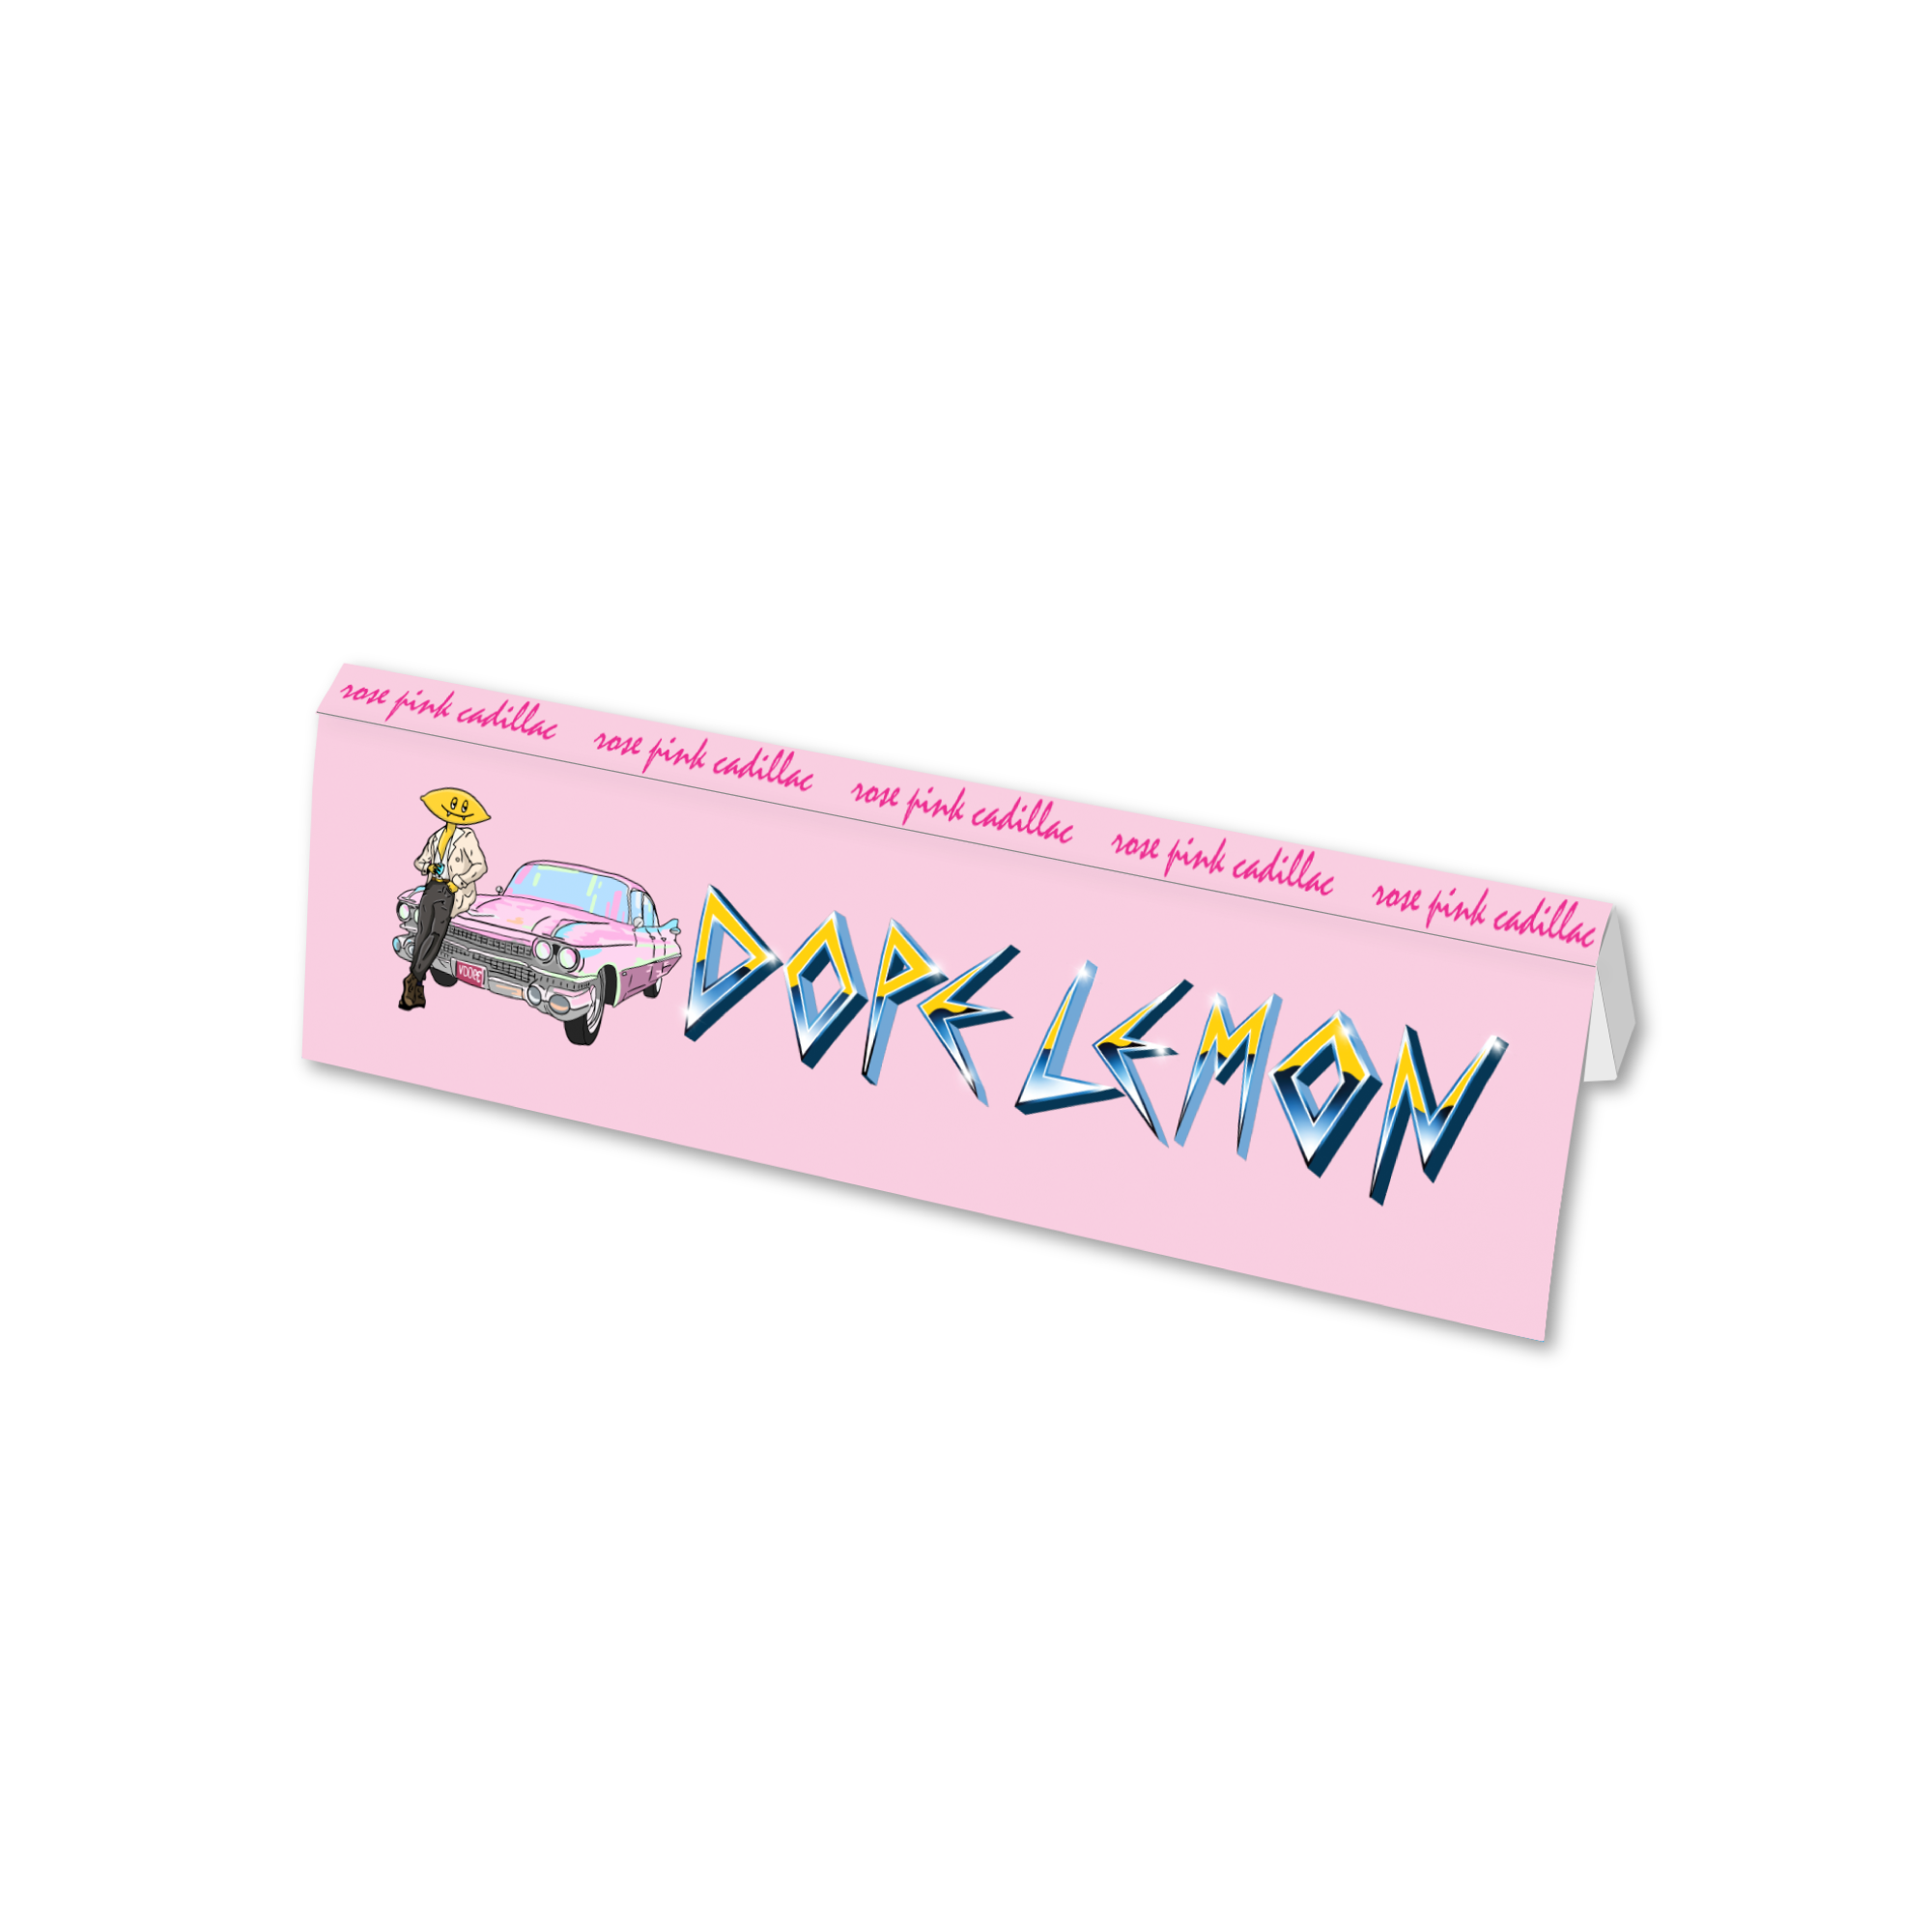 Dope Lemon / Rose Pink Cadillac CD